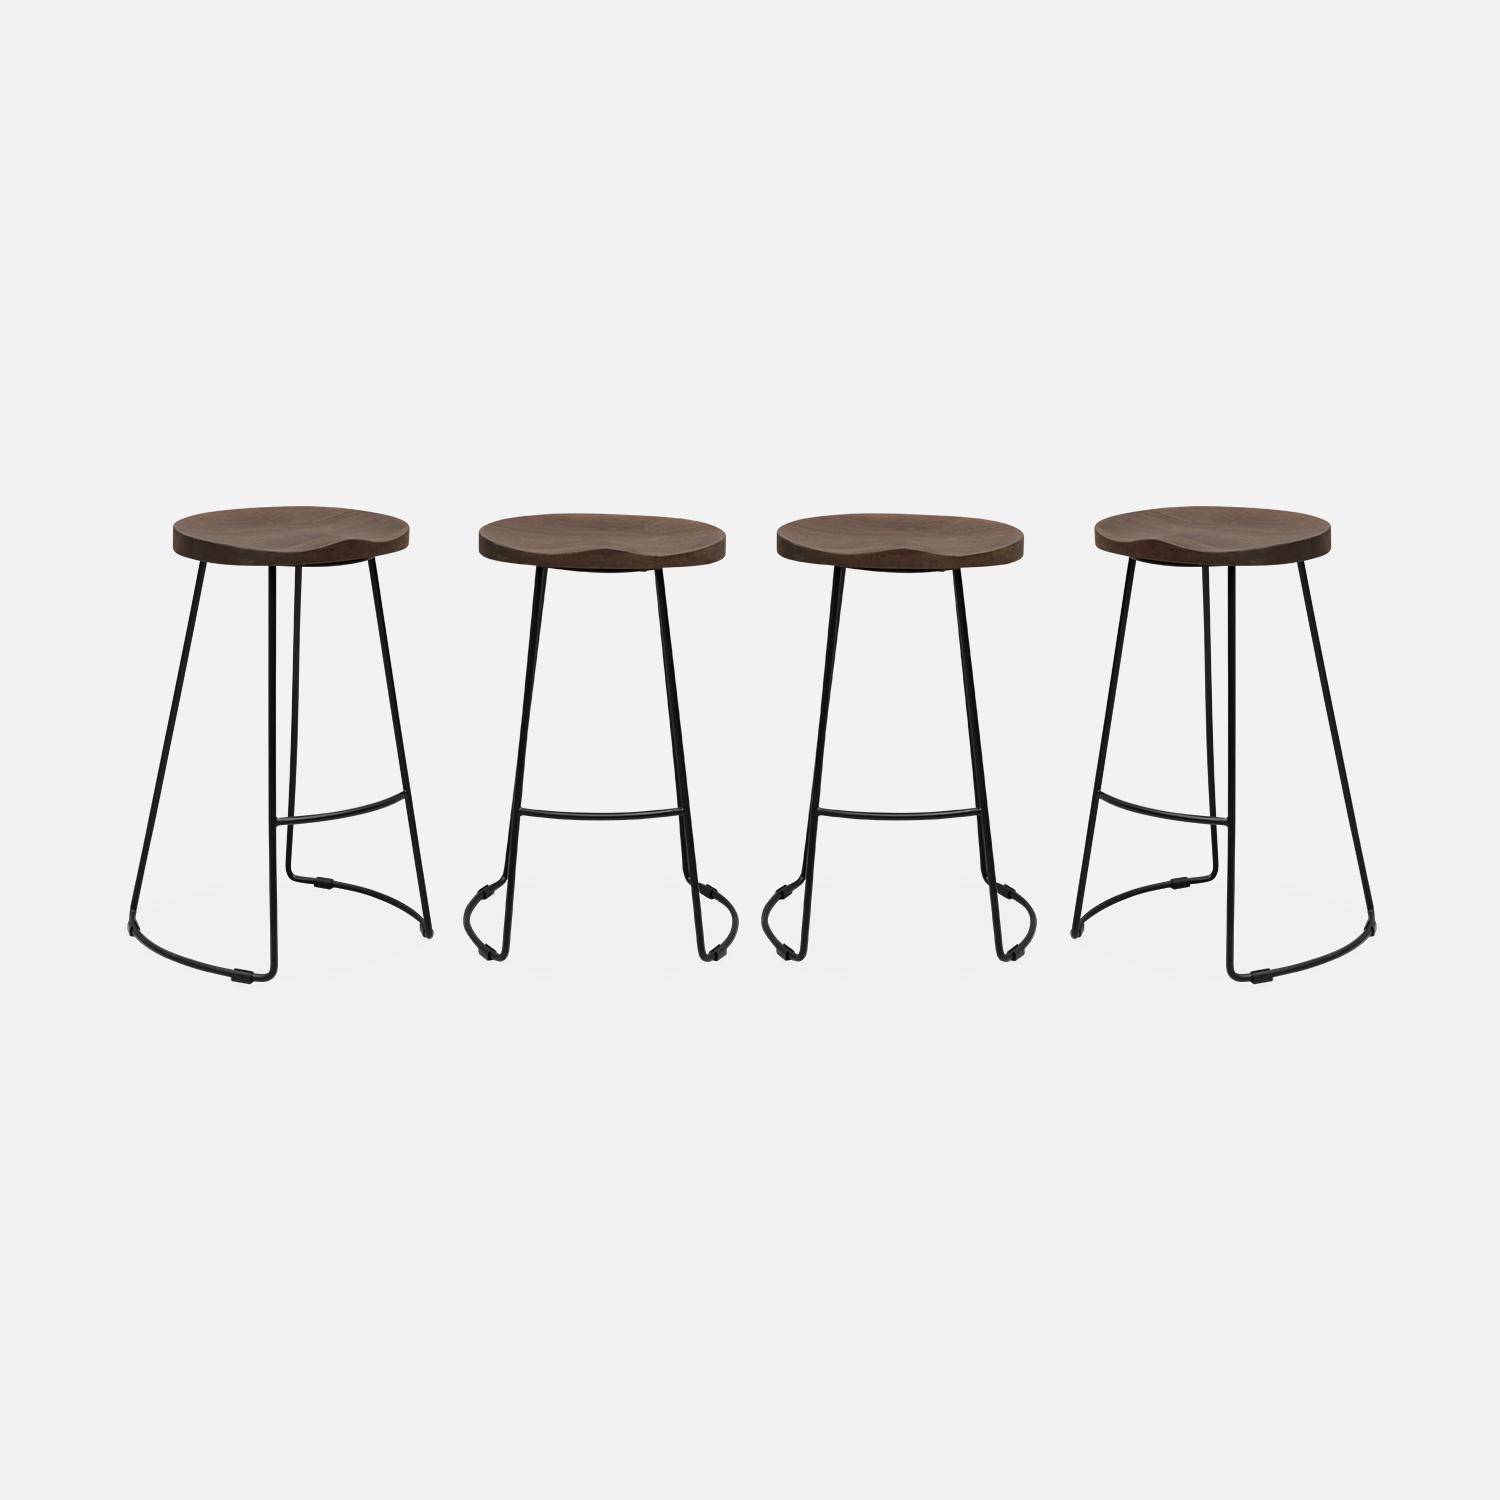 Set of 4 industrial metal and wooden bar stools, 44x36x65cm, Jaya, Light Walnut, Mango wood seat, black metal legs,sweeek,Photo4